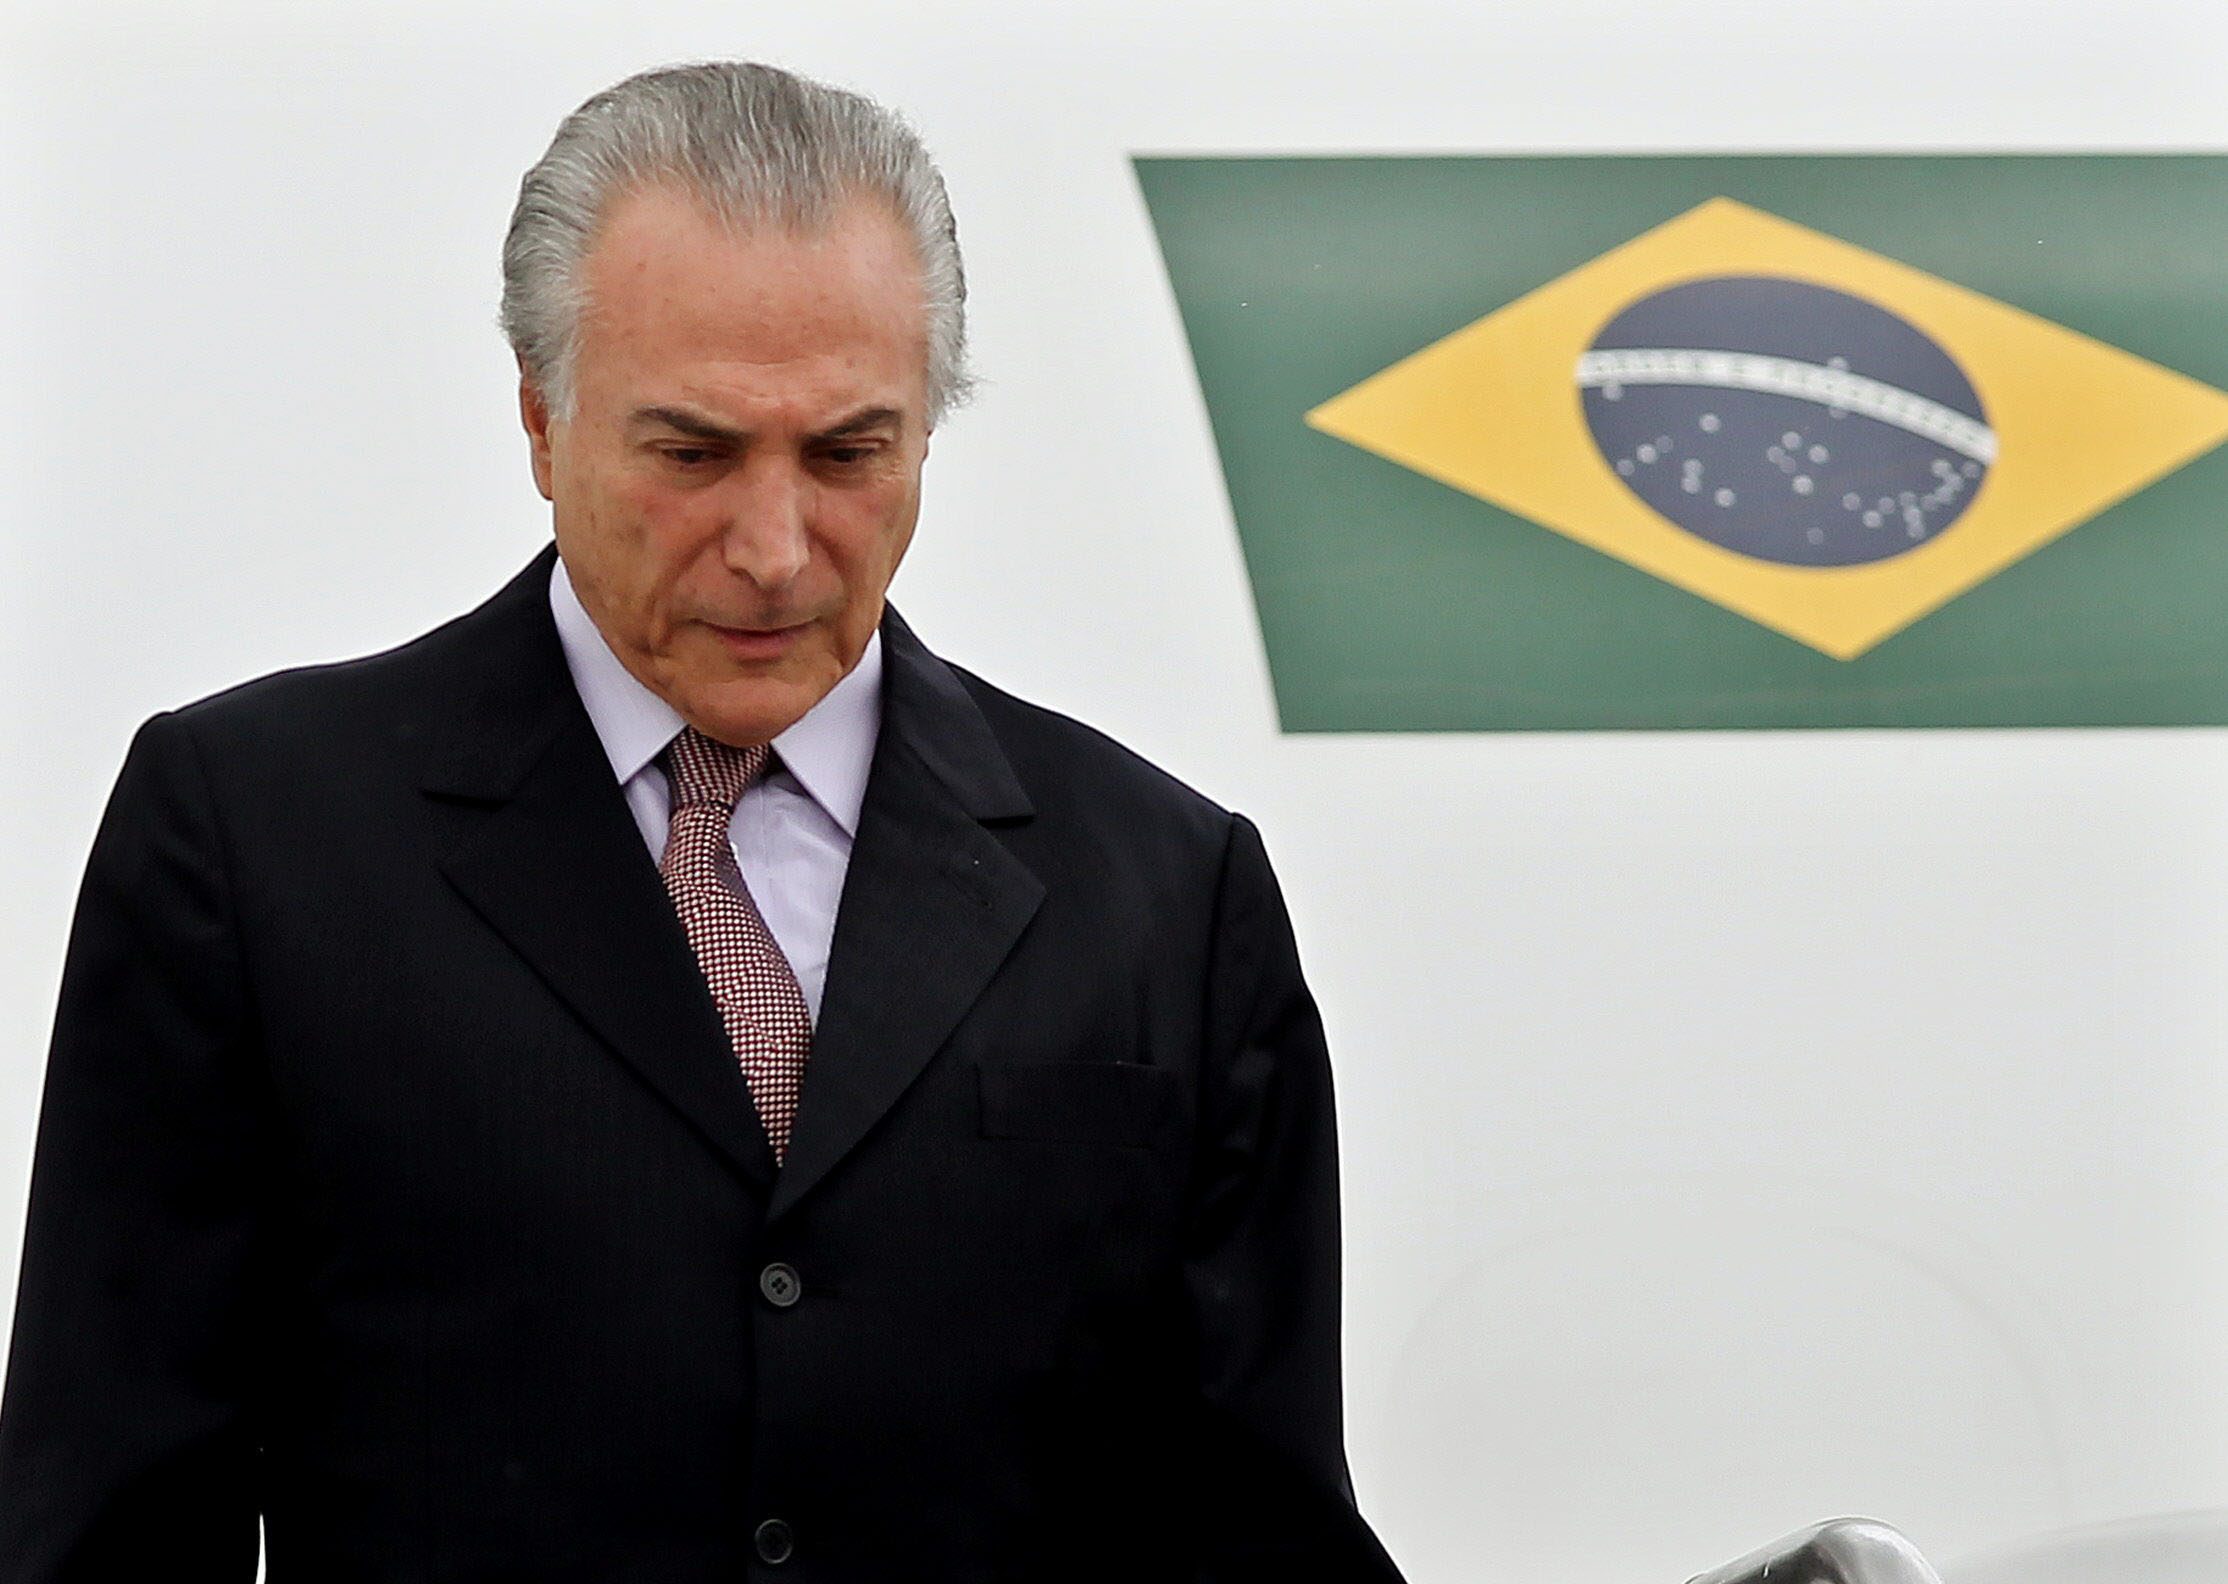 New president, same crises in Brazil